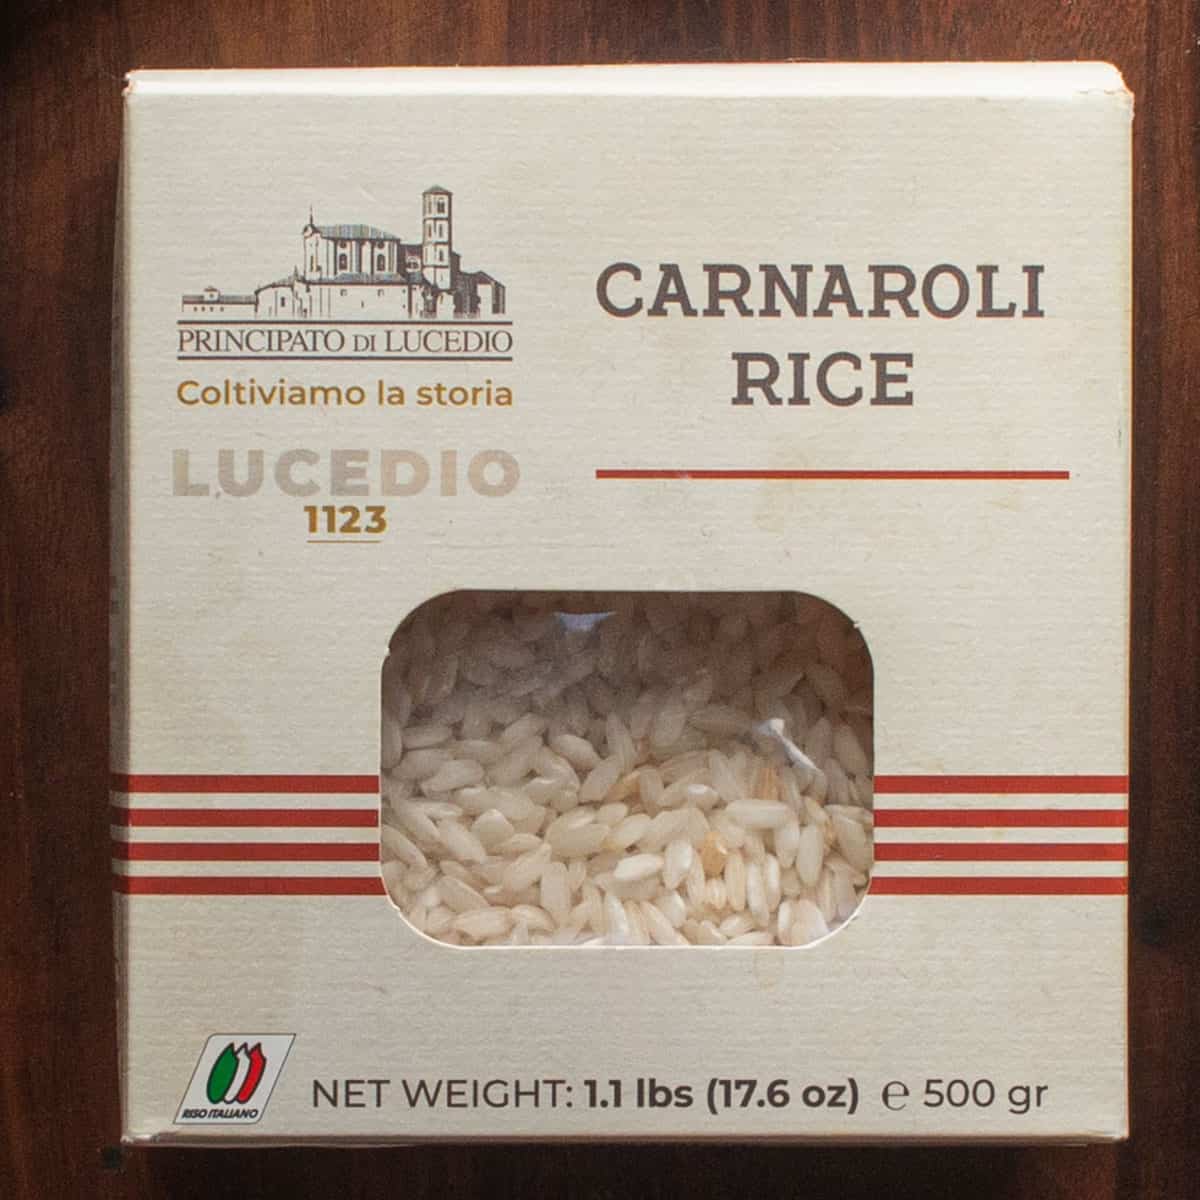 A box of carnaroli risotto rice. 